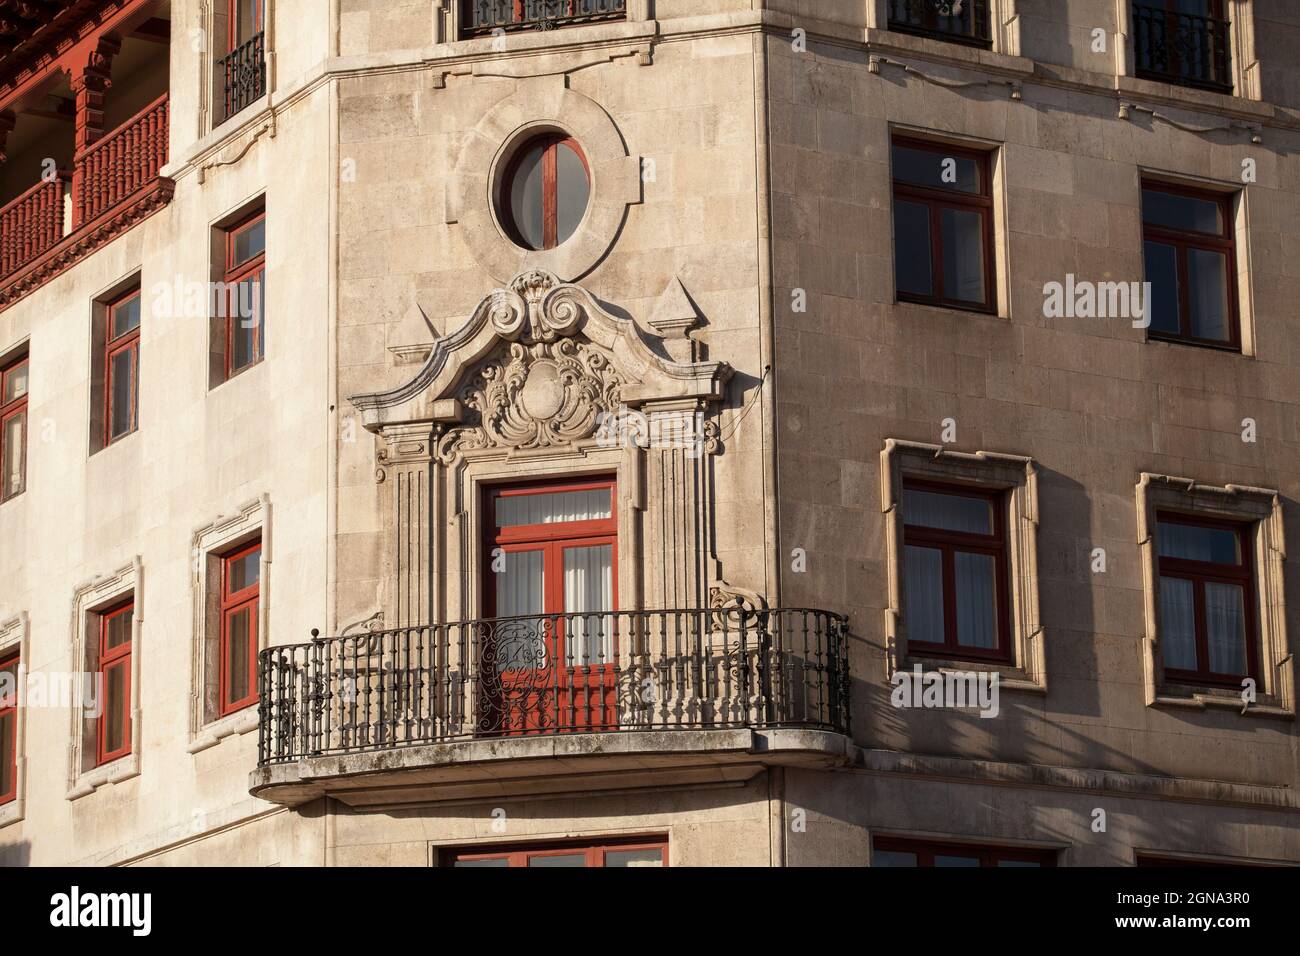 European architecture balcony, buildings in spain, Stock Photo